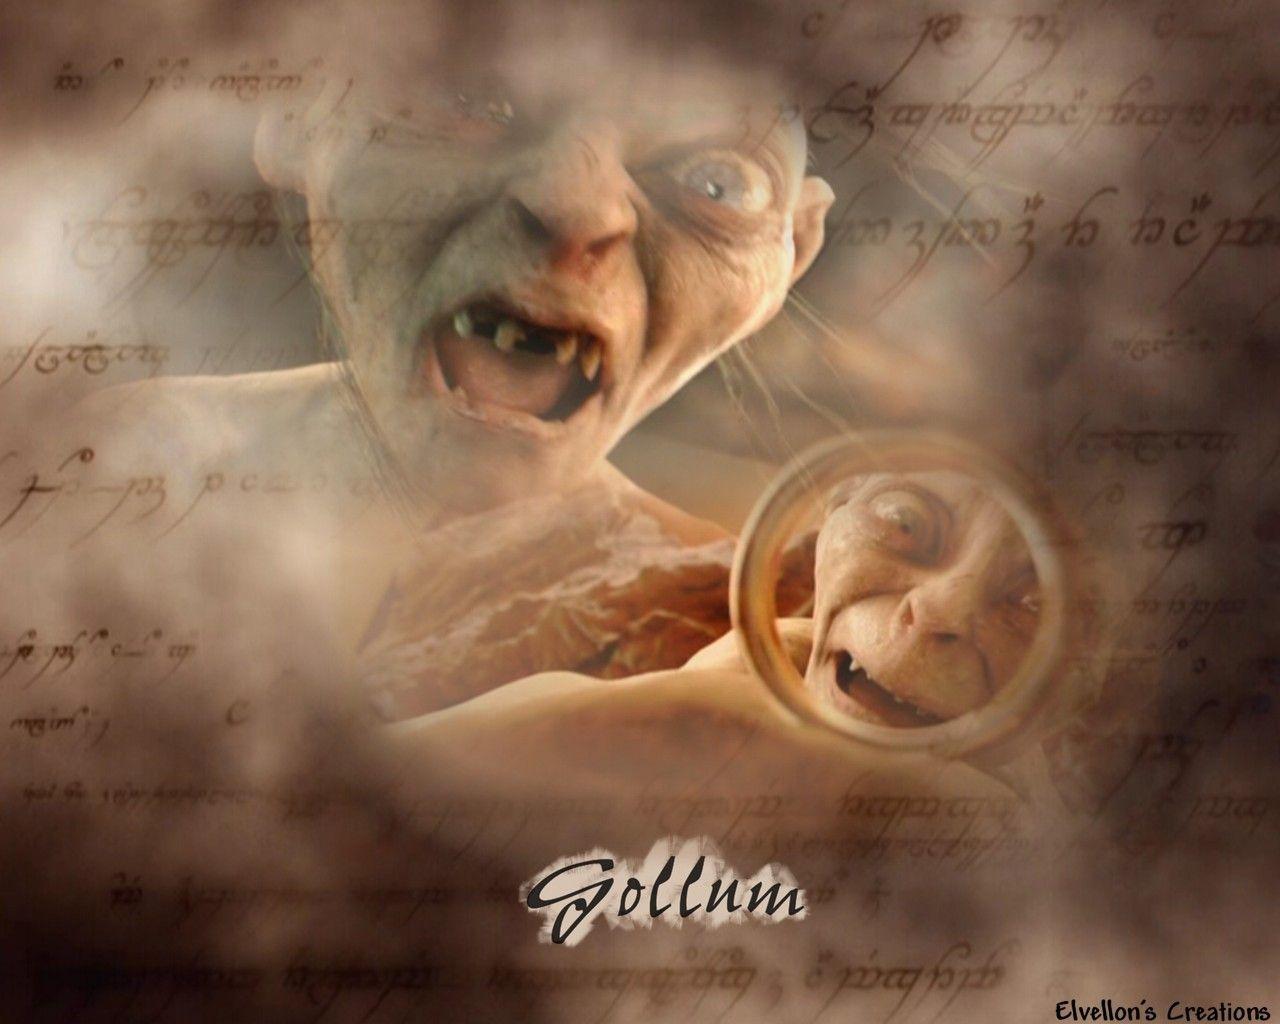 Smeagol Gollum Image Gollum HD Wallpaper And Background Photo